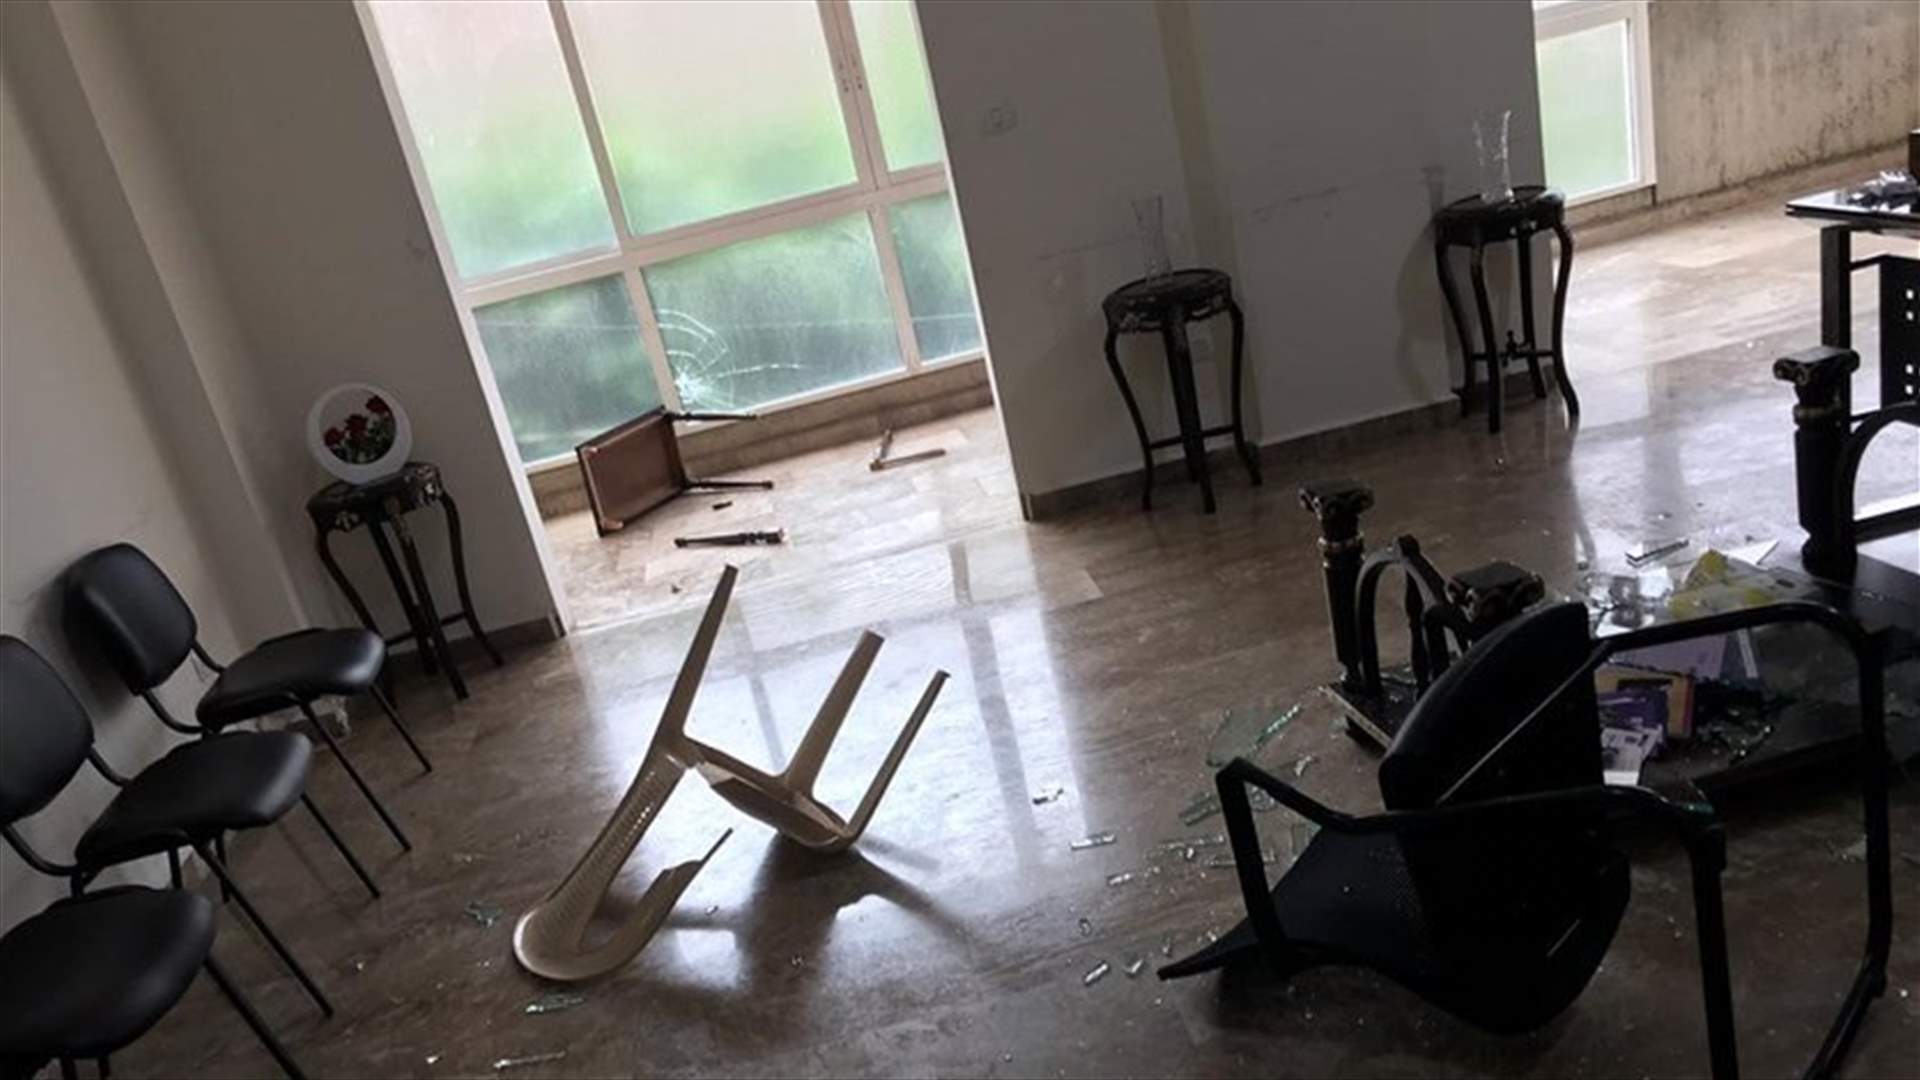 Protesters break into office of MP Ali Darwish, destroy furniture